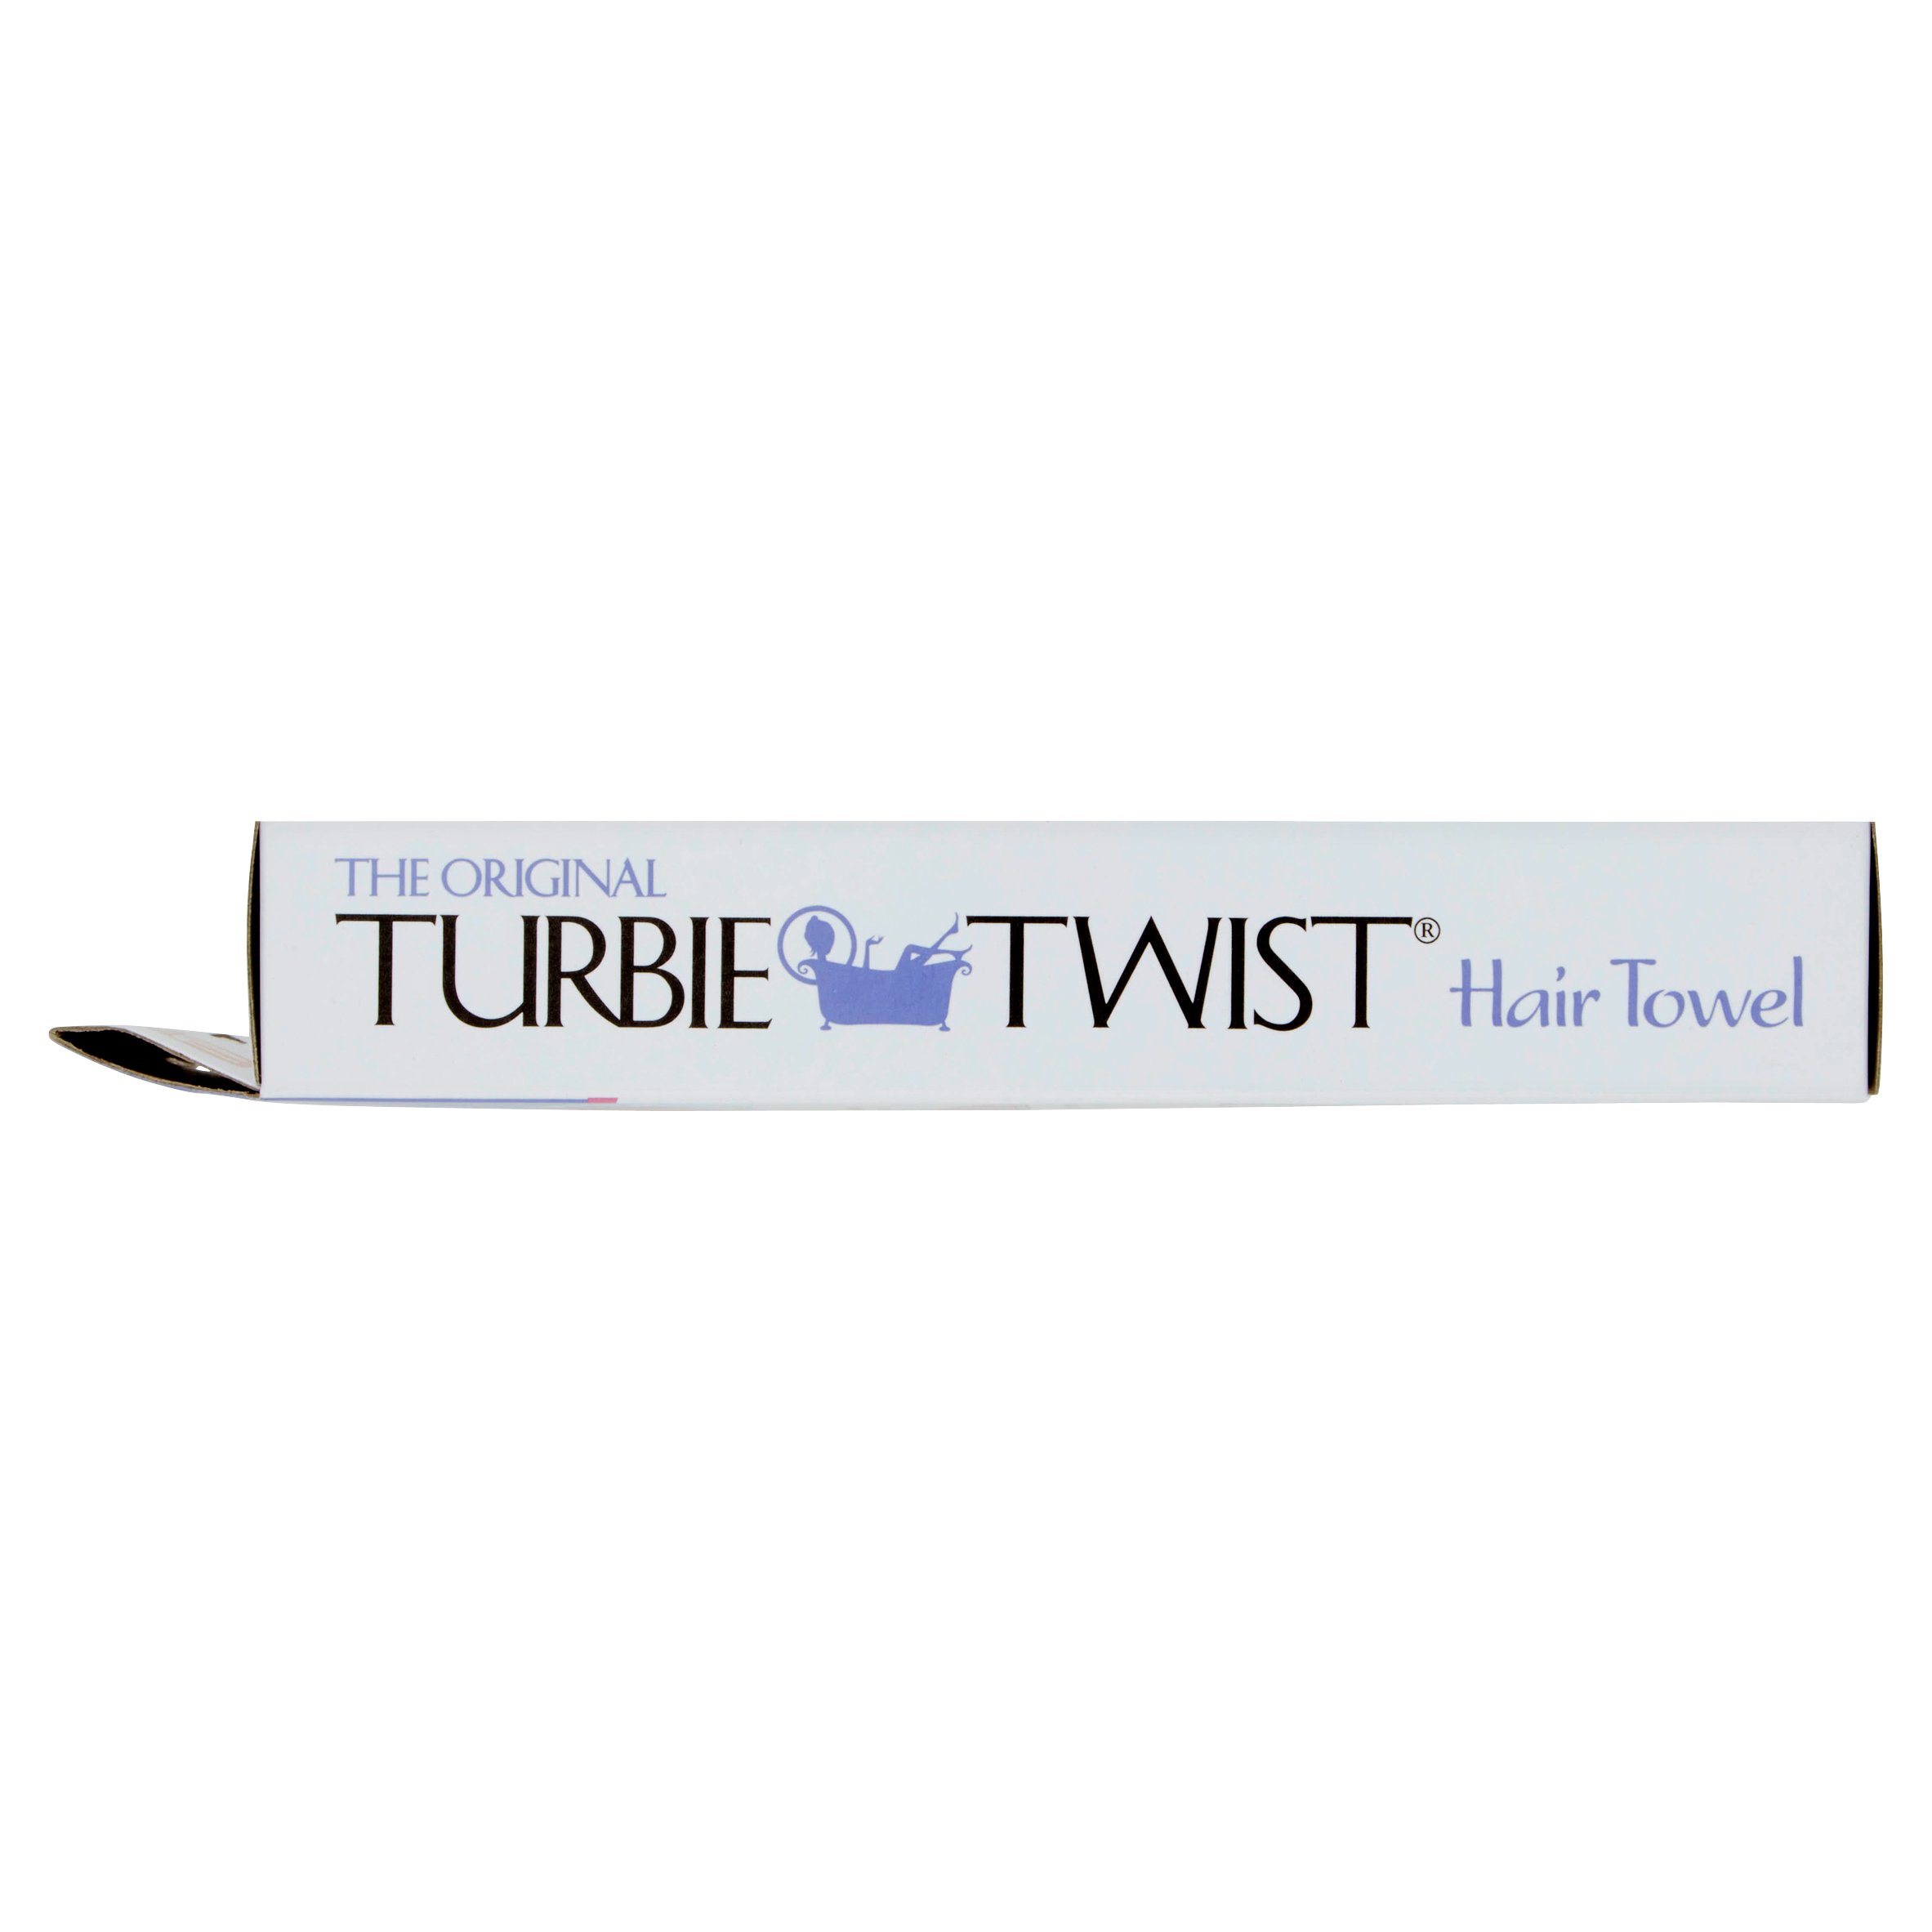 Turbie Twist the Original Microfiber Super-Absorbent Hair Towel, Colors May Vary - image 2 of 6